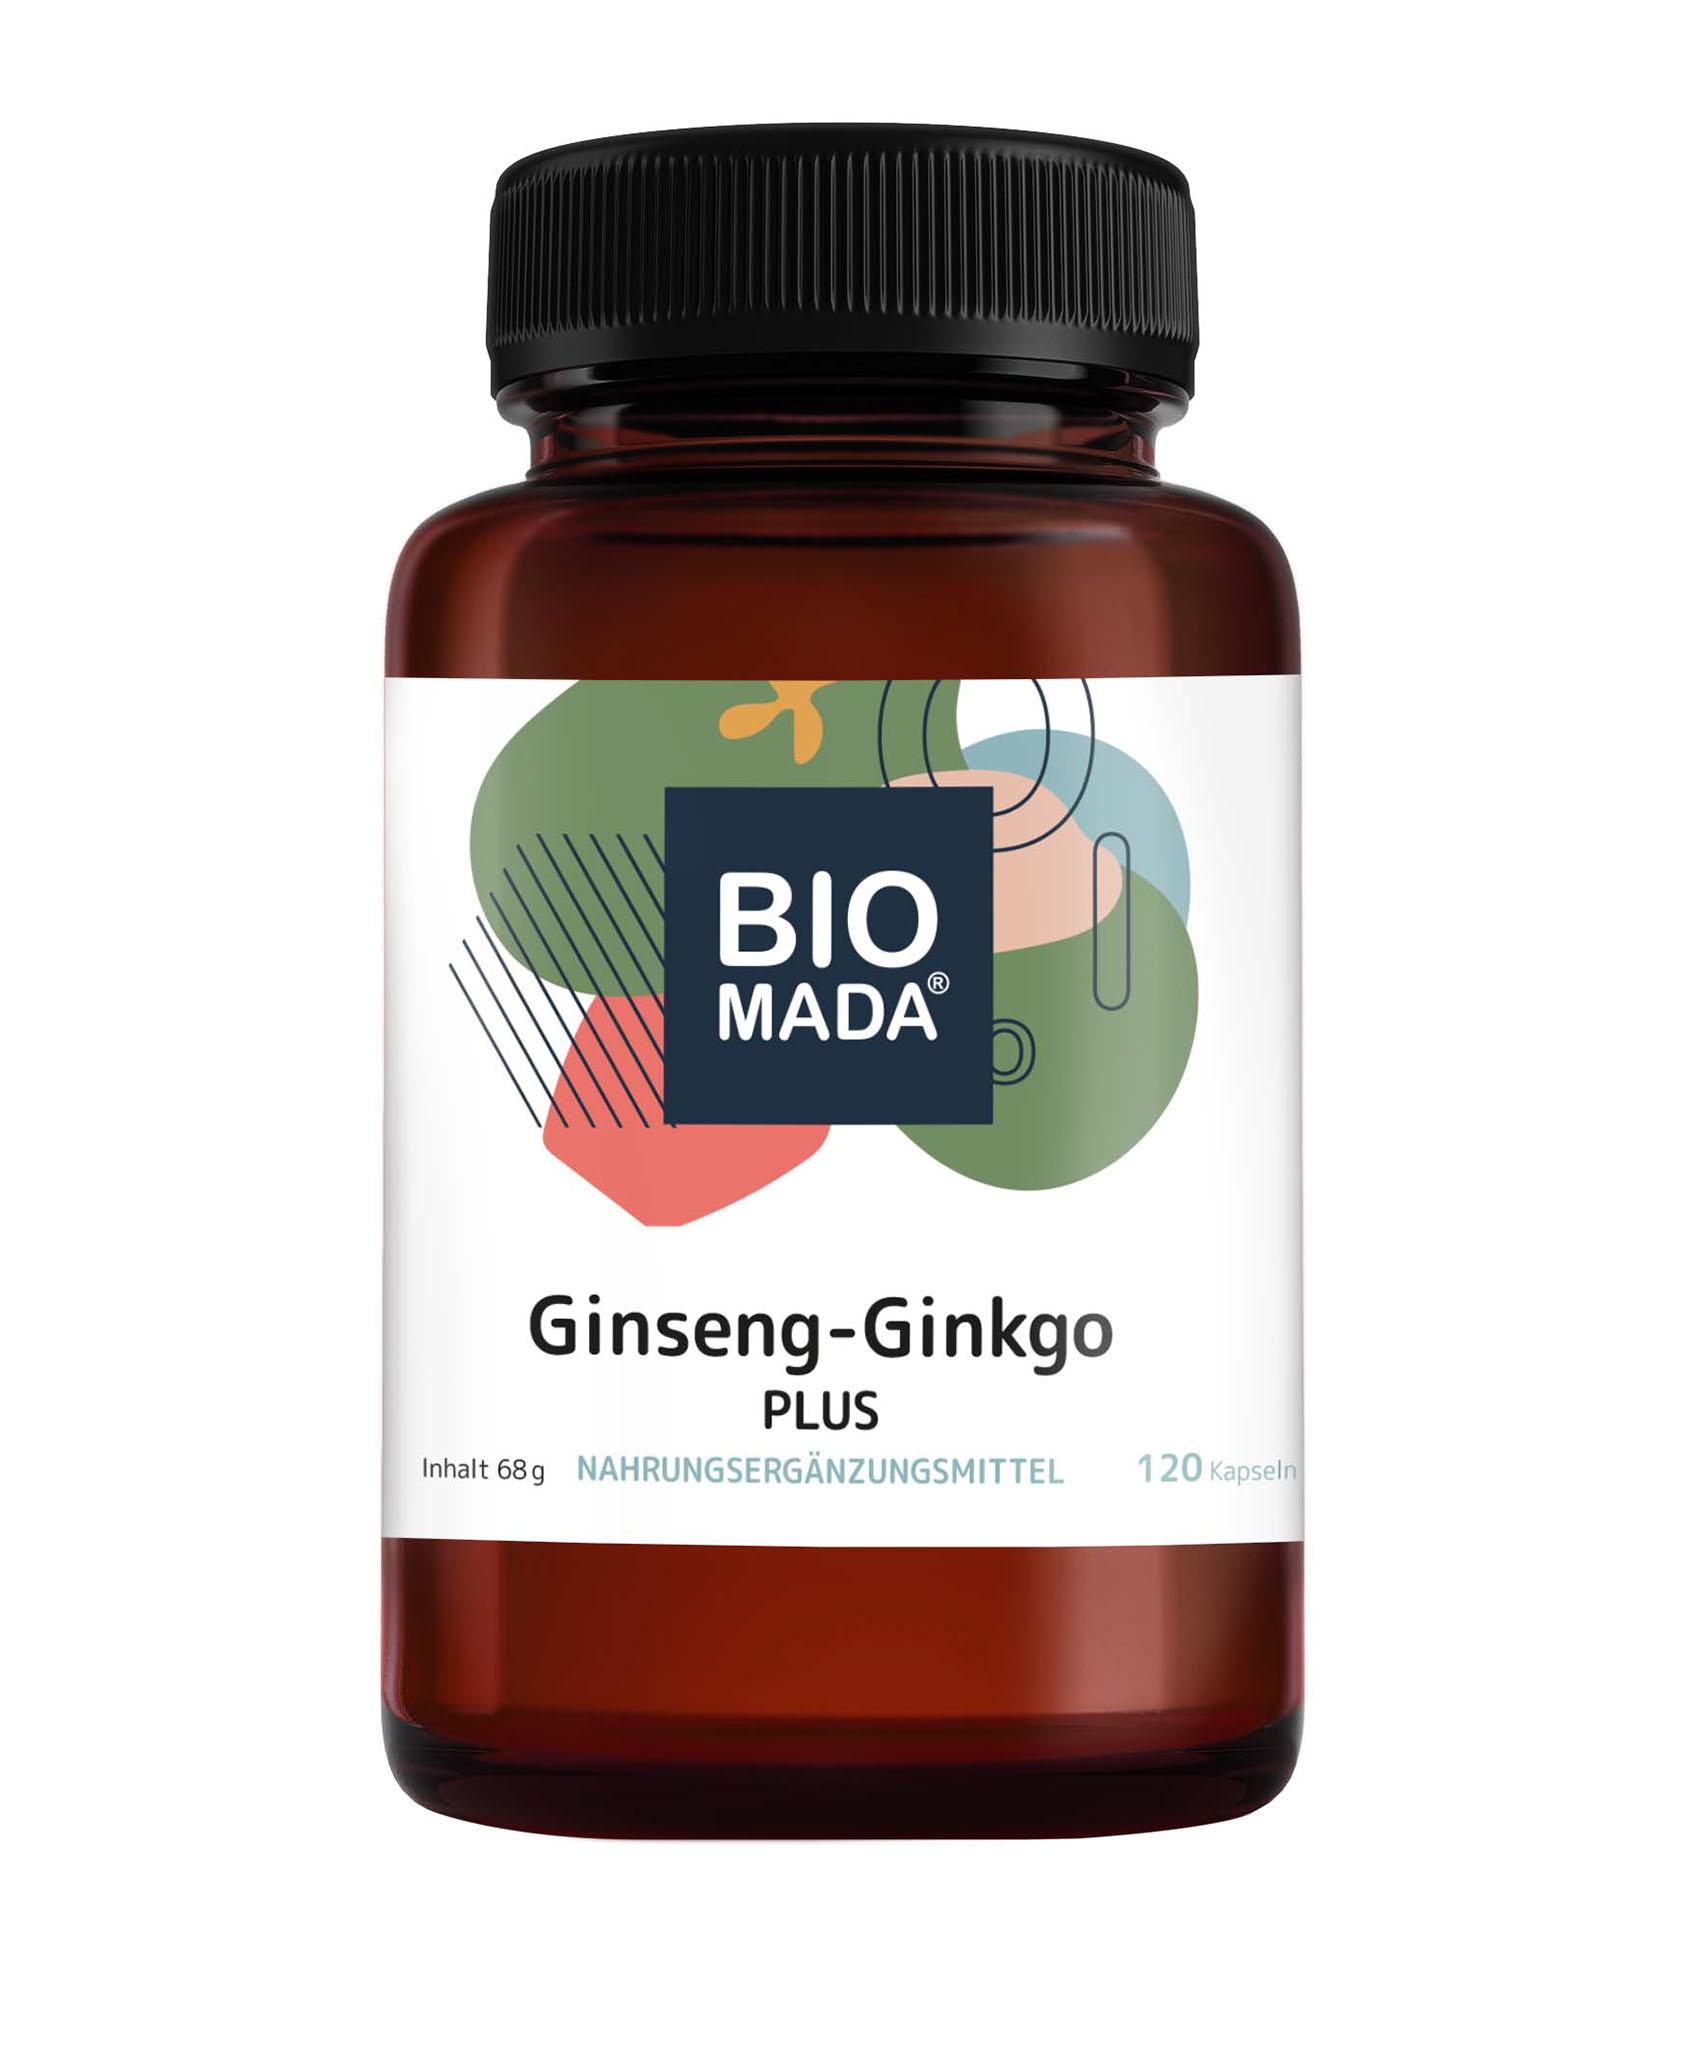 Ginseng-Ginkgo PLUS